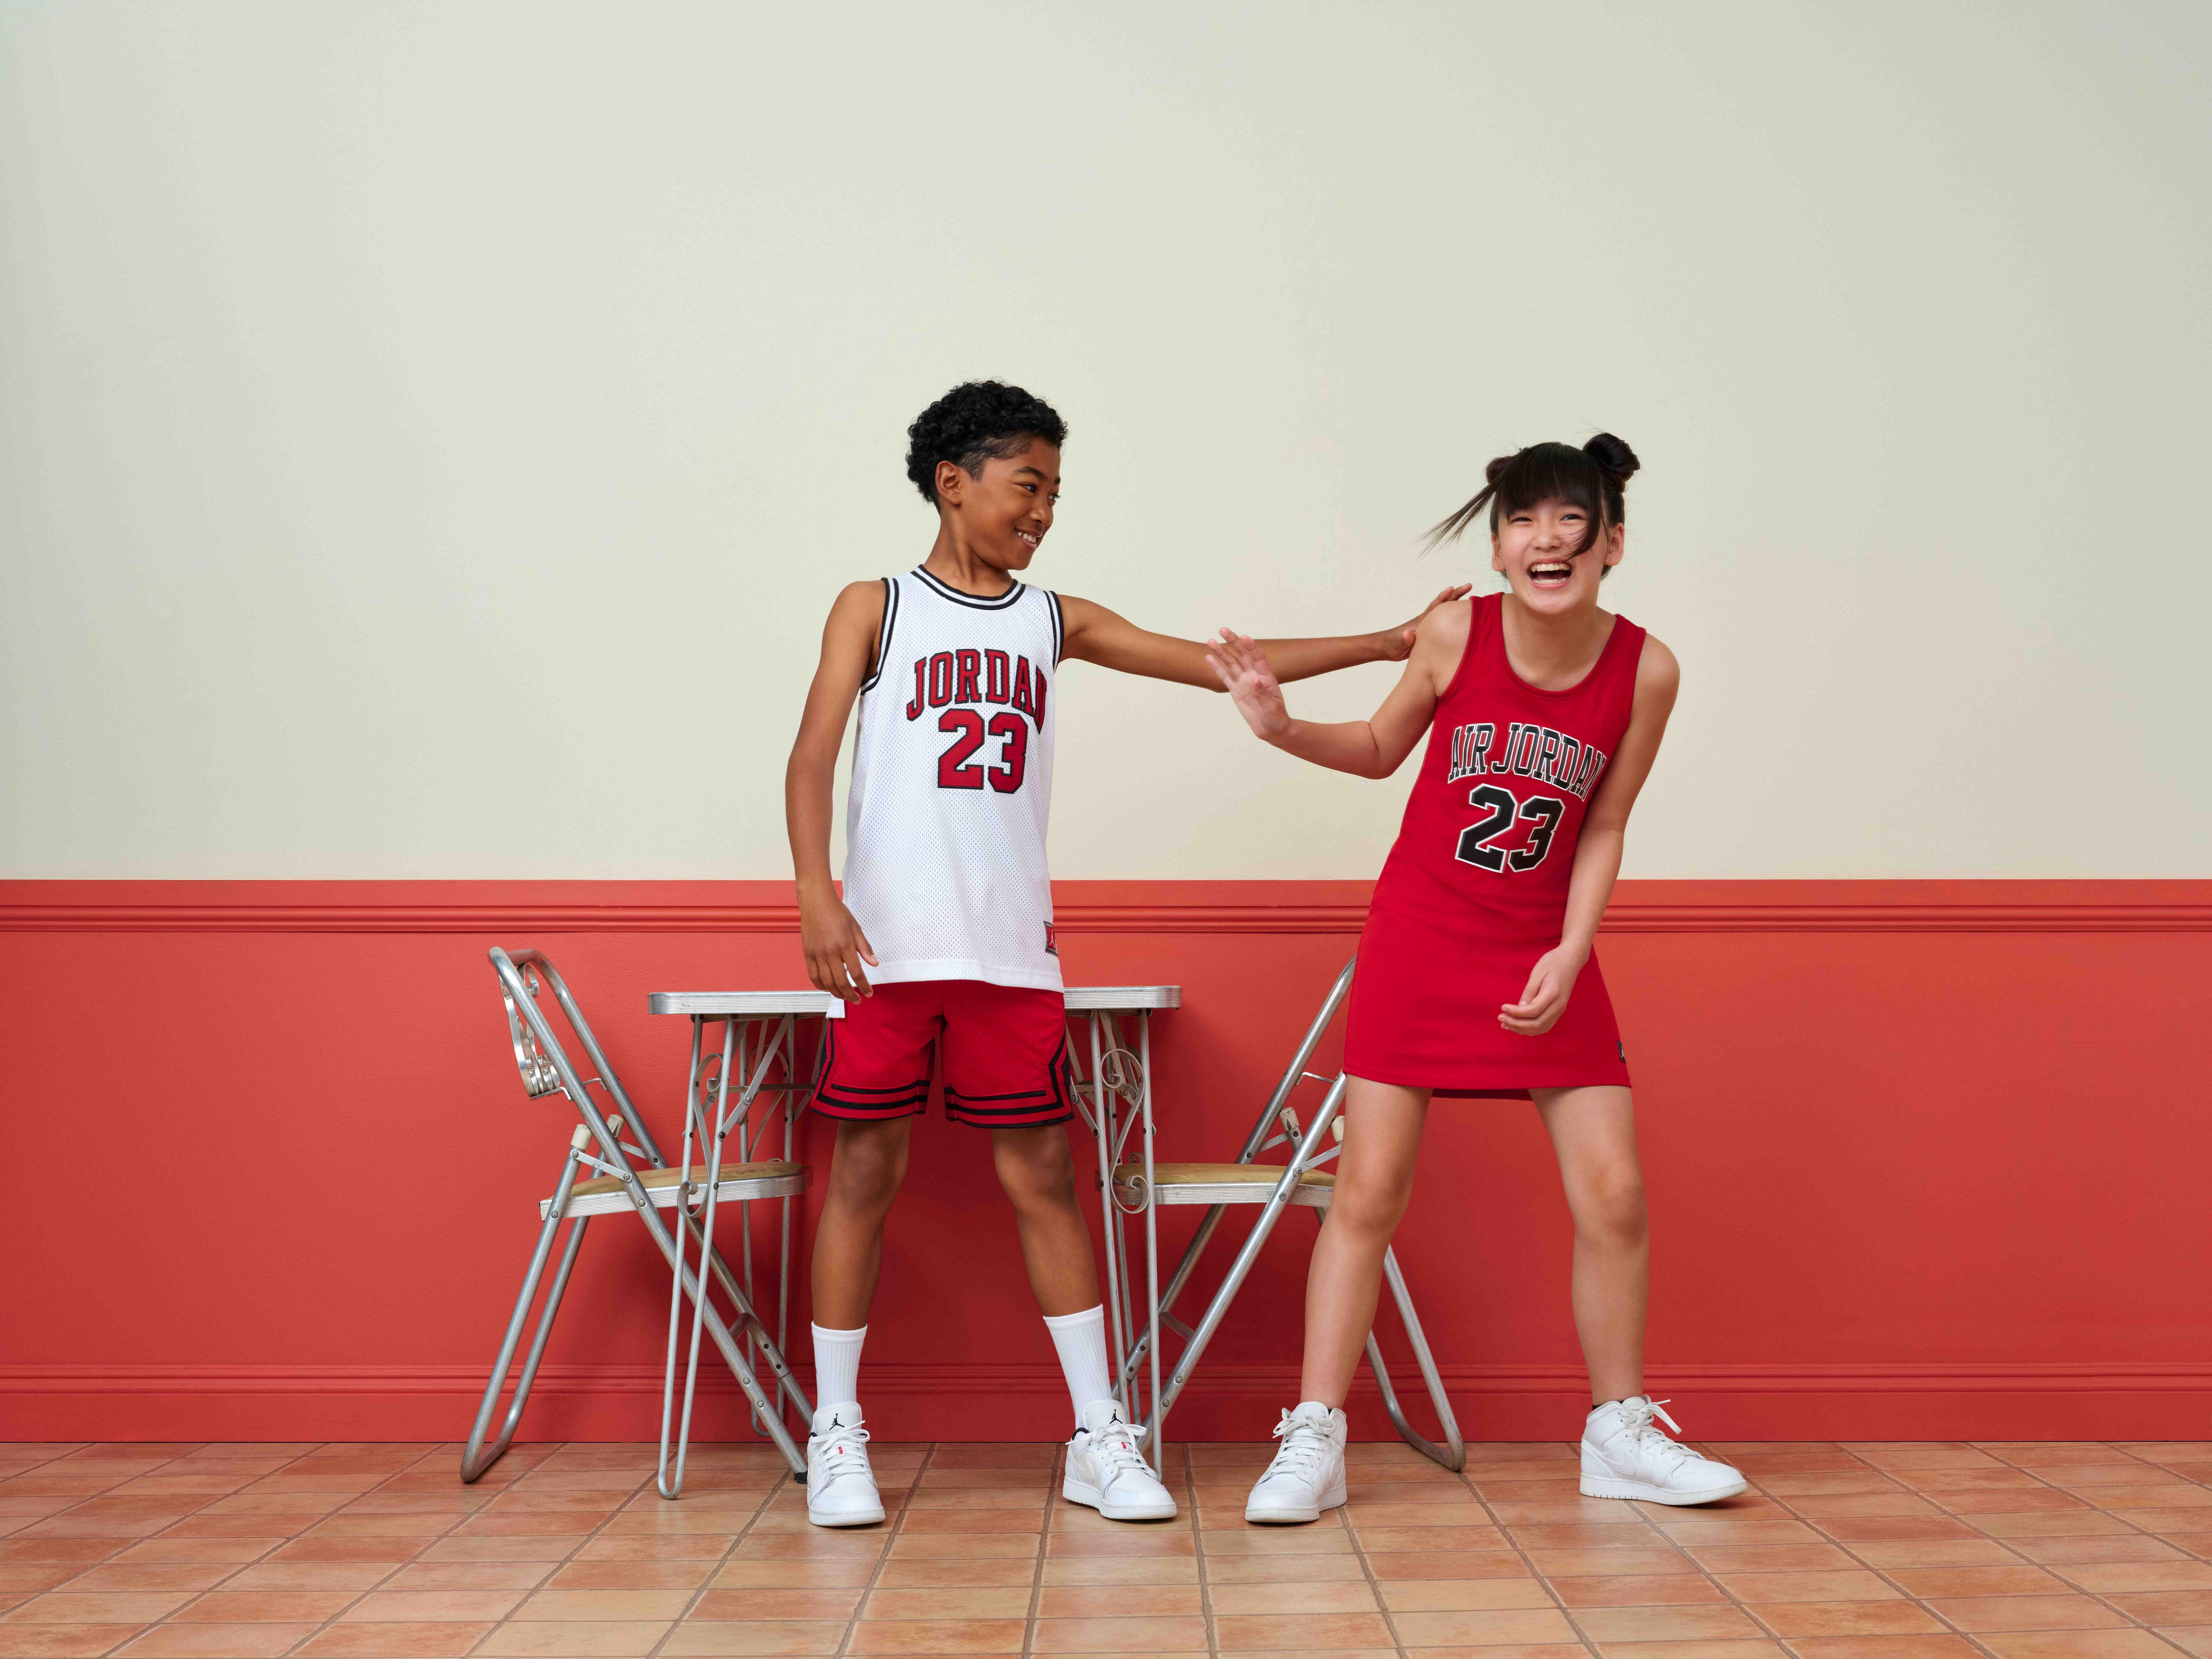 NWT Nike Air Jordan Jersey Dress Bred Girls/Teens Sz L FREE SHIPPING!!